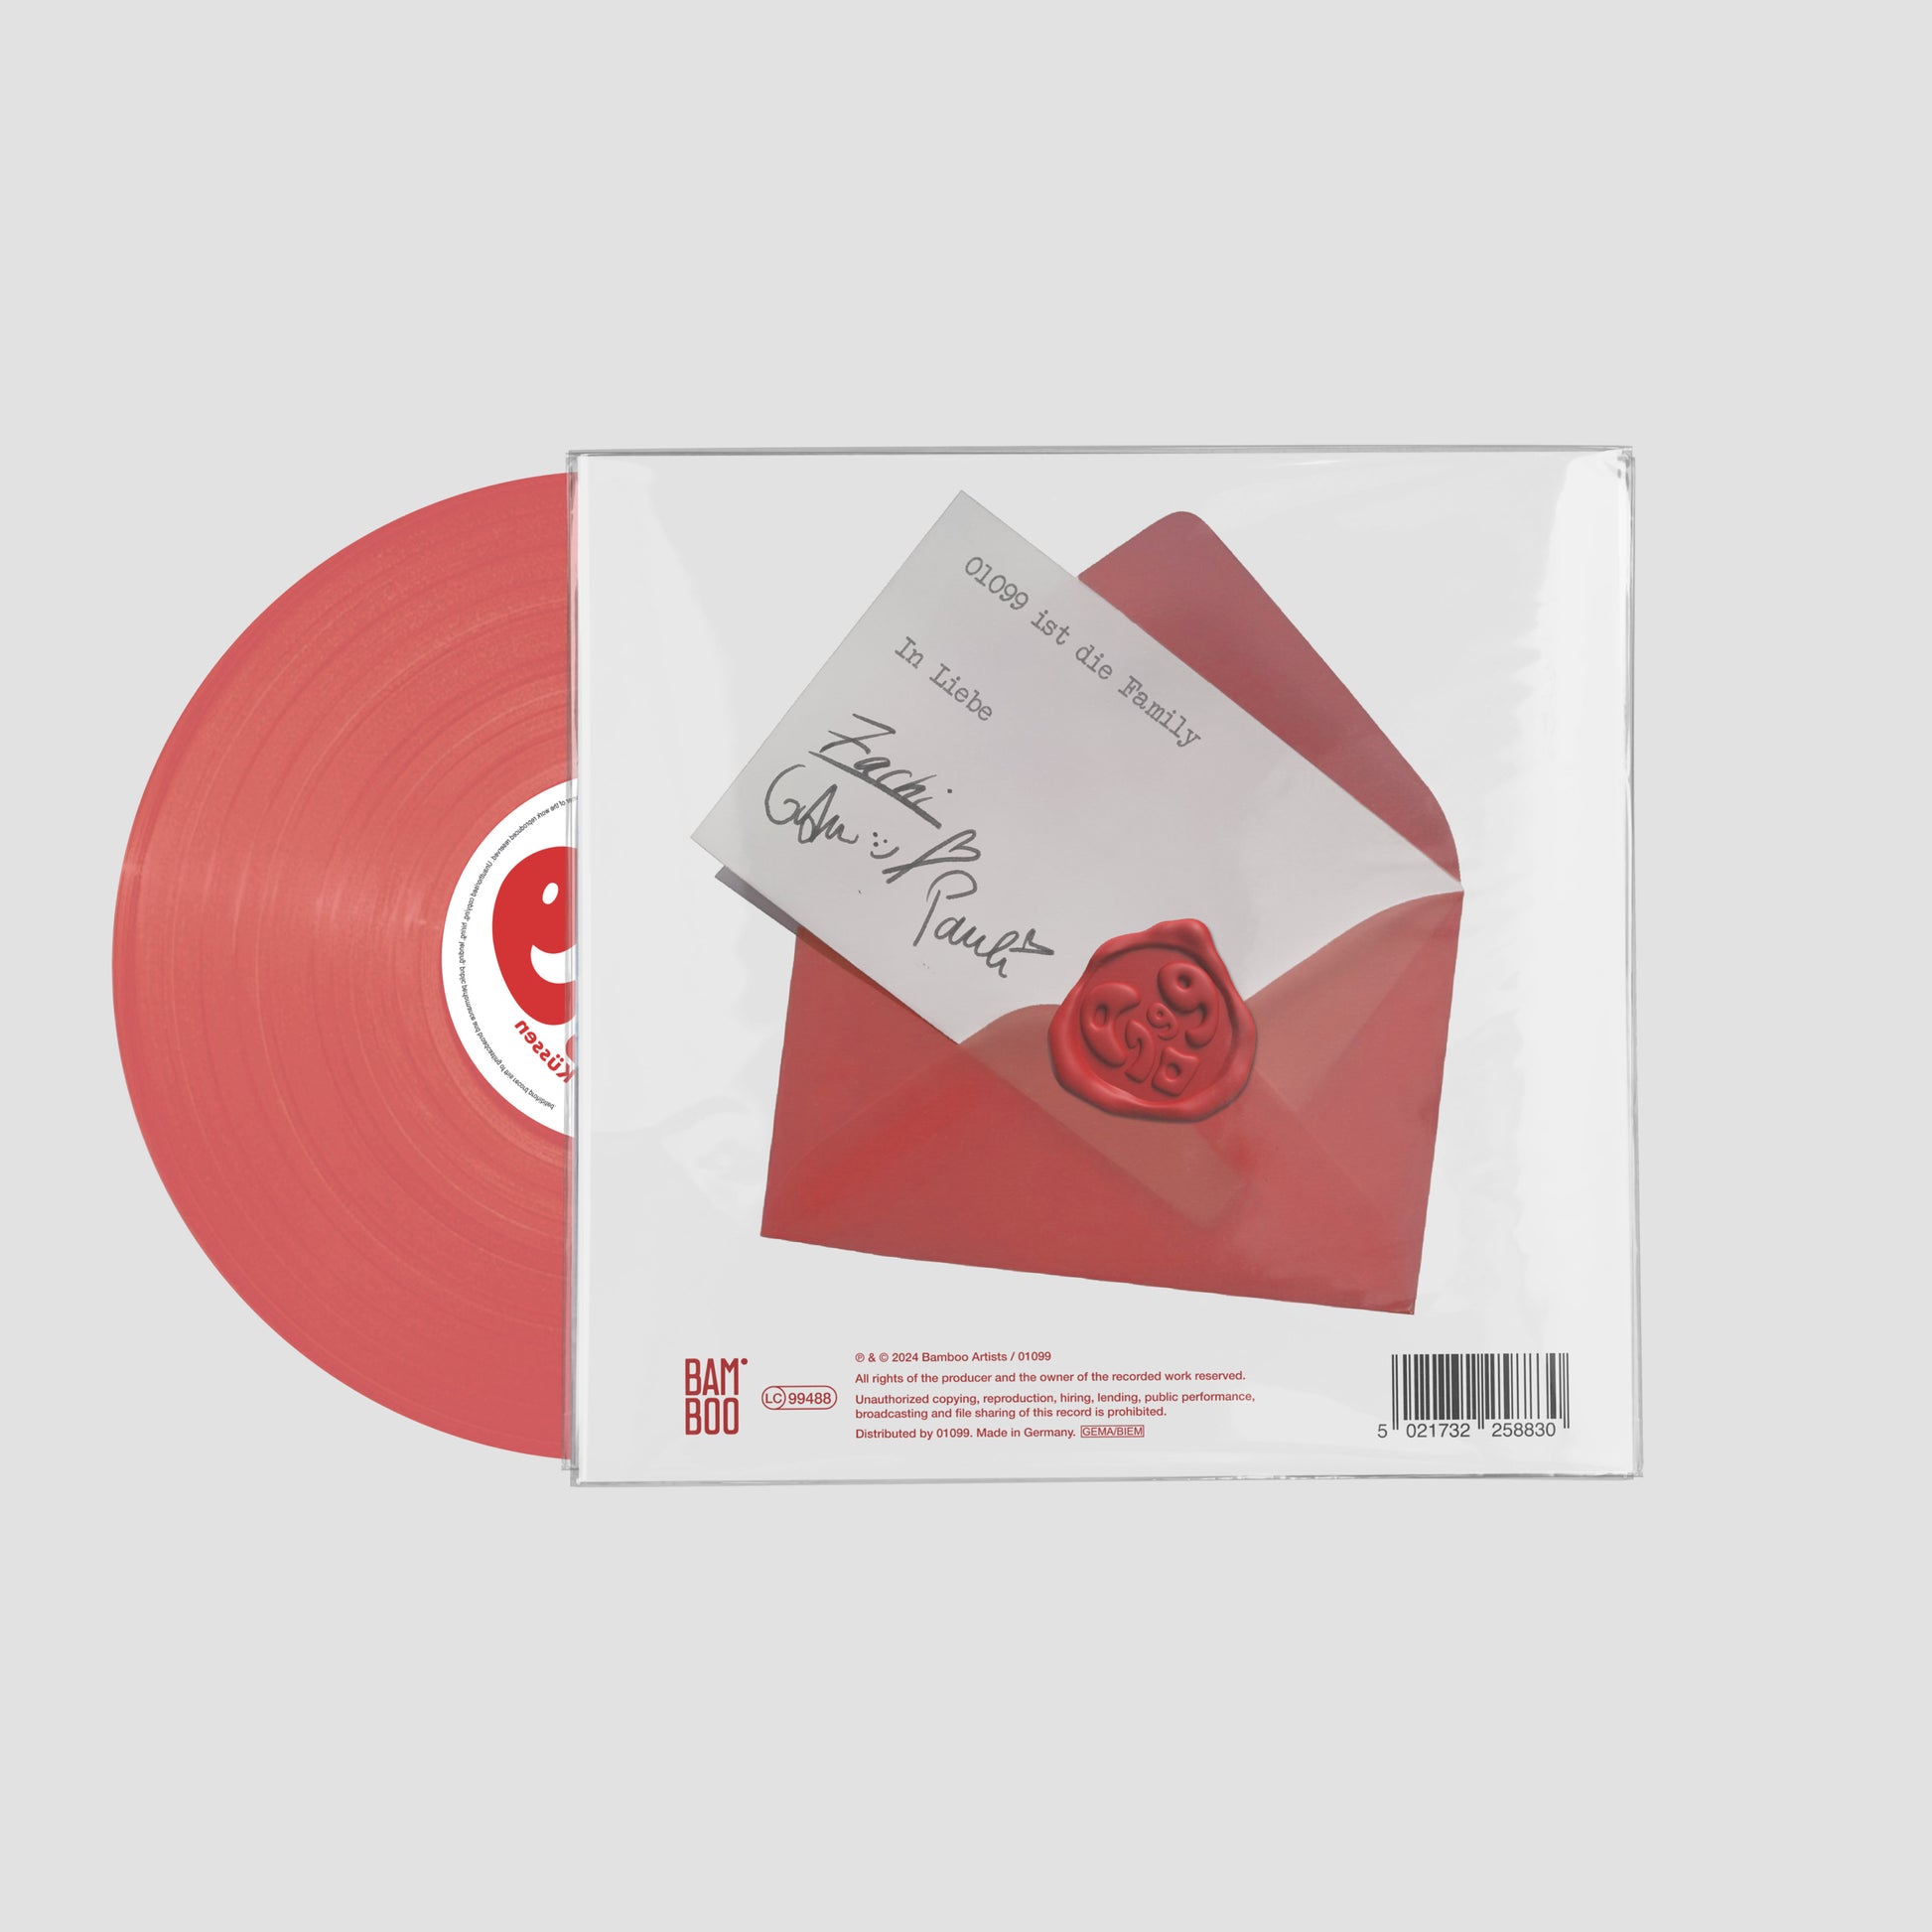 01099 - Küssen rot transparent - Colored Vinyl